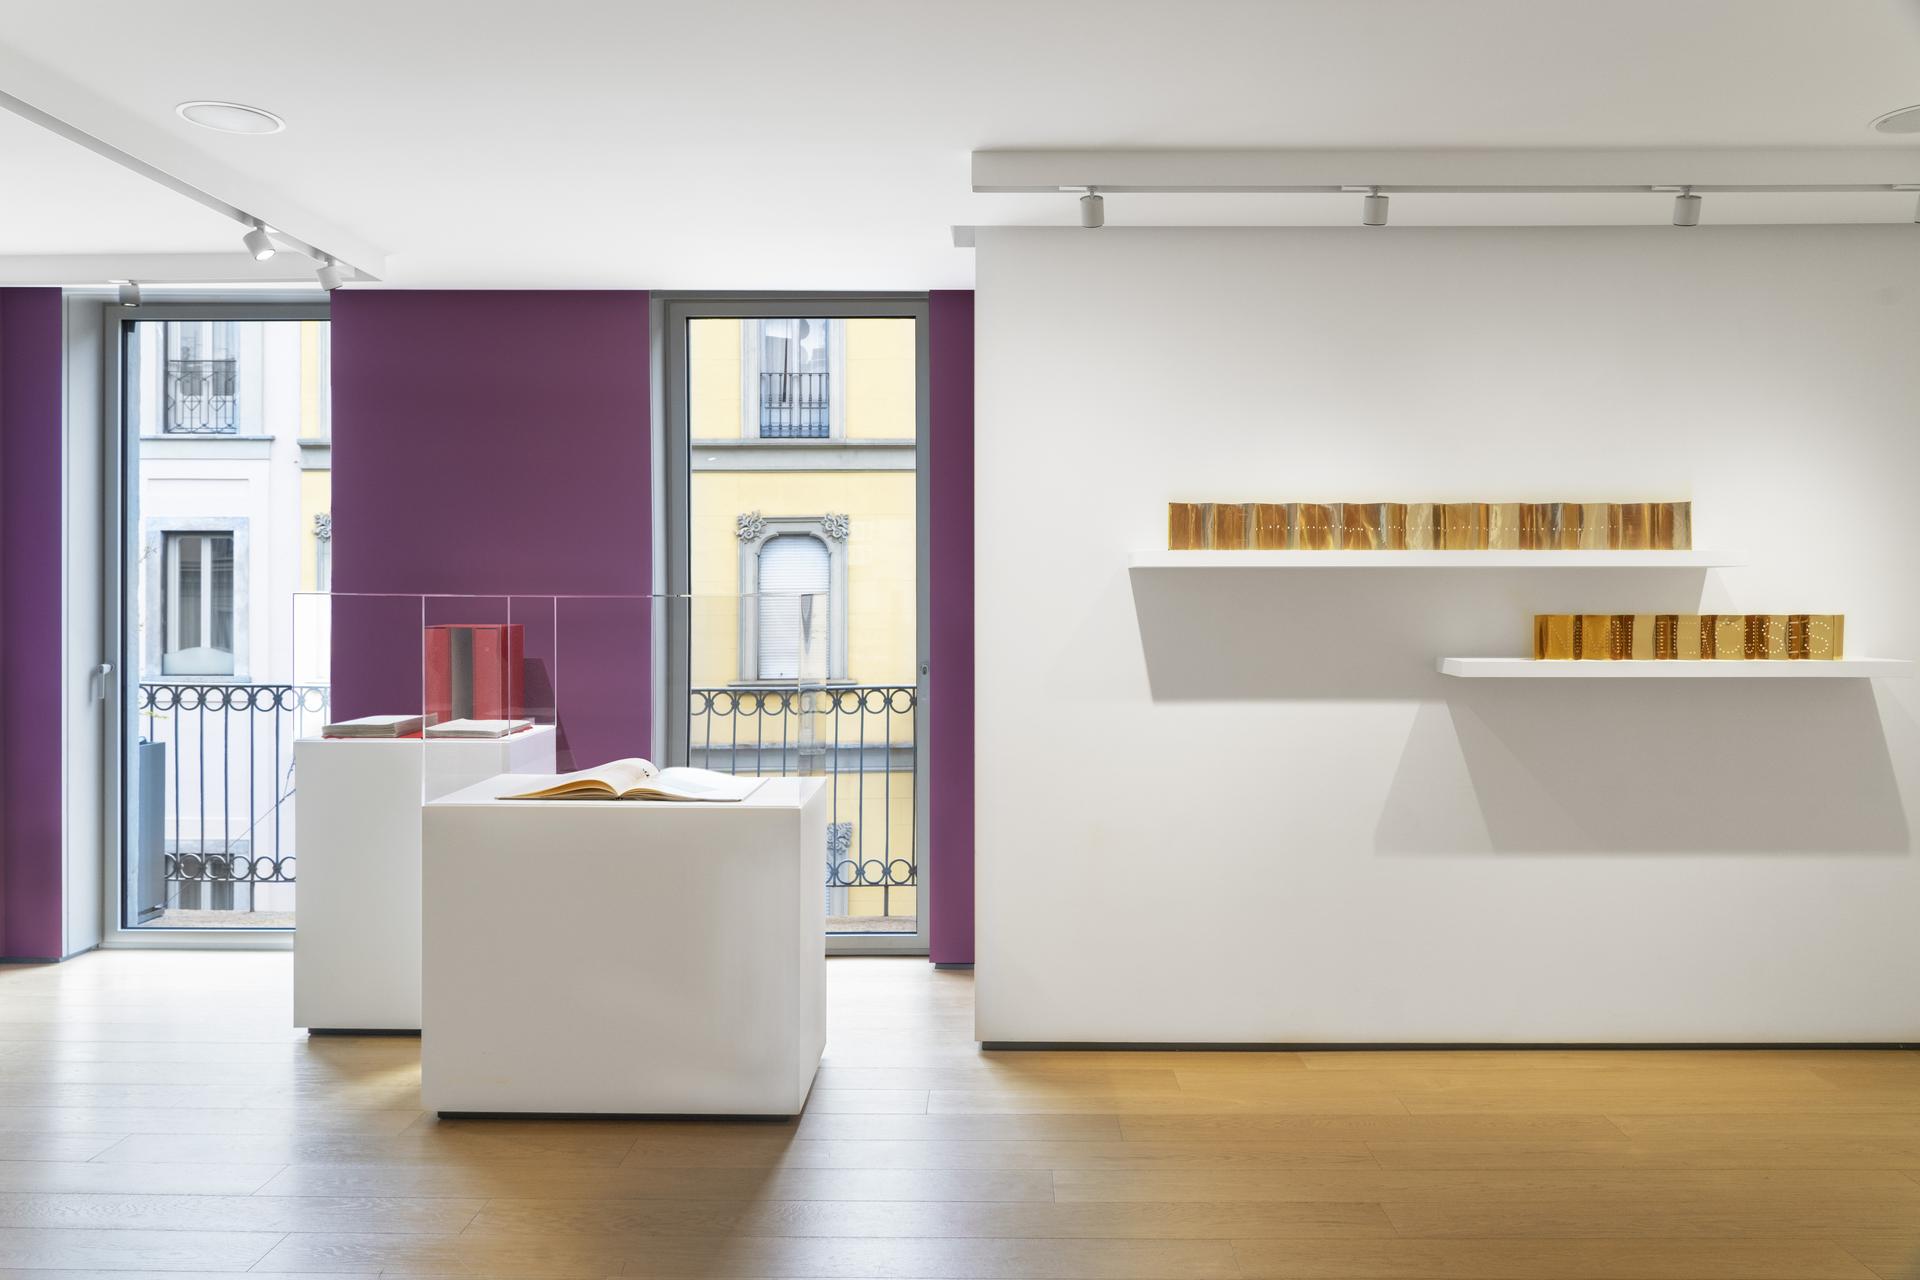 Installation view, Opus liber, BUILDING TERZO PIANO, Milano, ph. Simone Panzeri